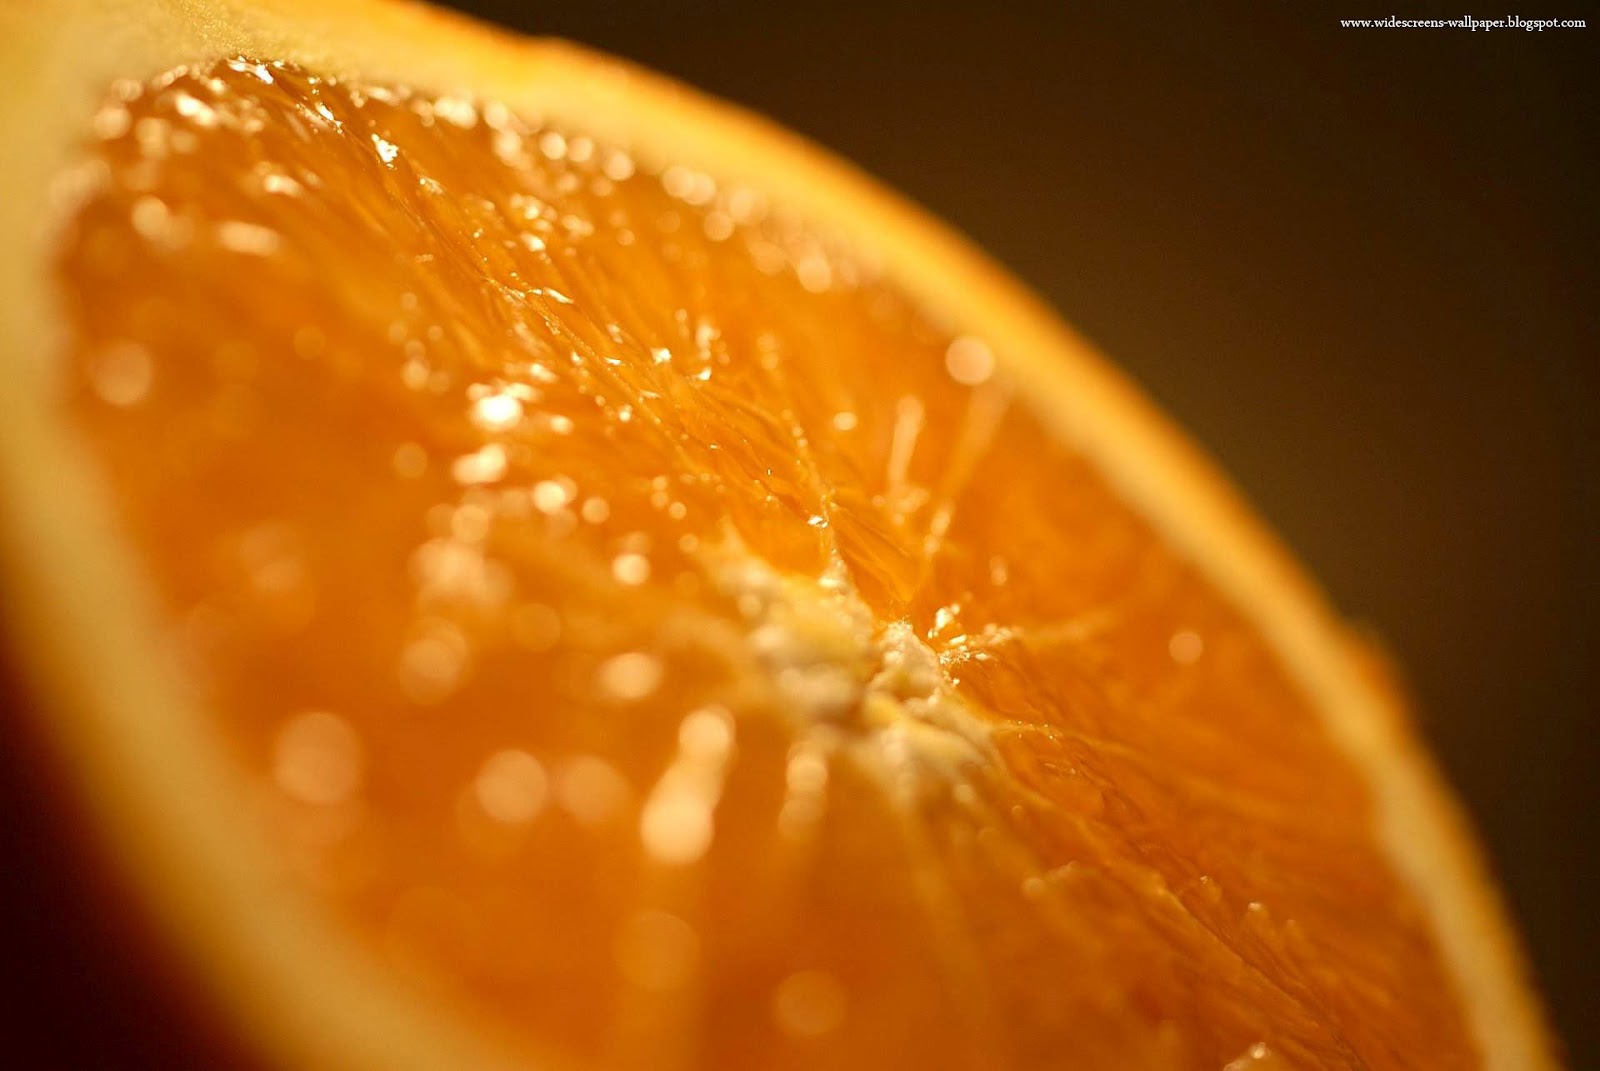 citrus wallpaper,orange,clementine,citrus,mandarin orange,macro photography